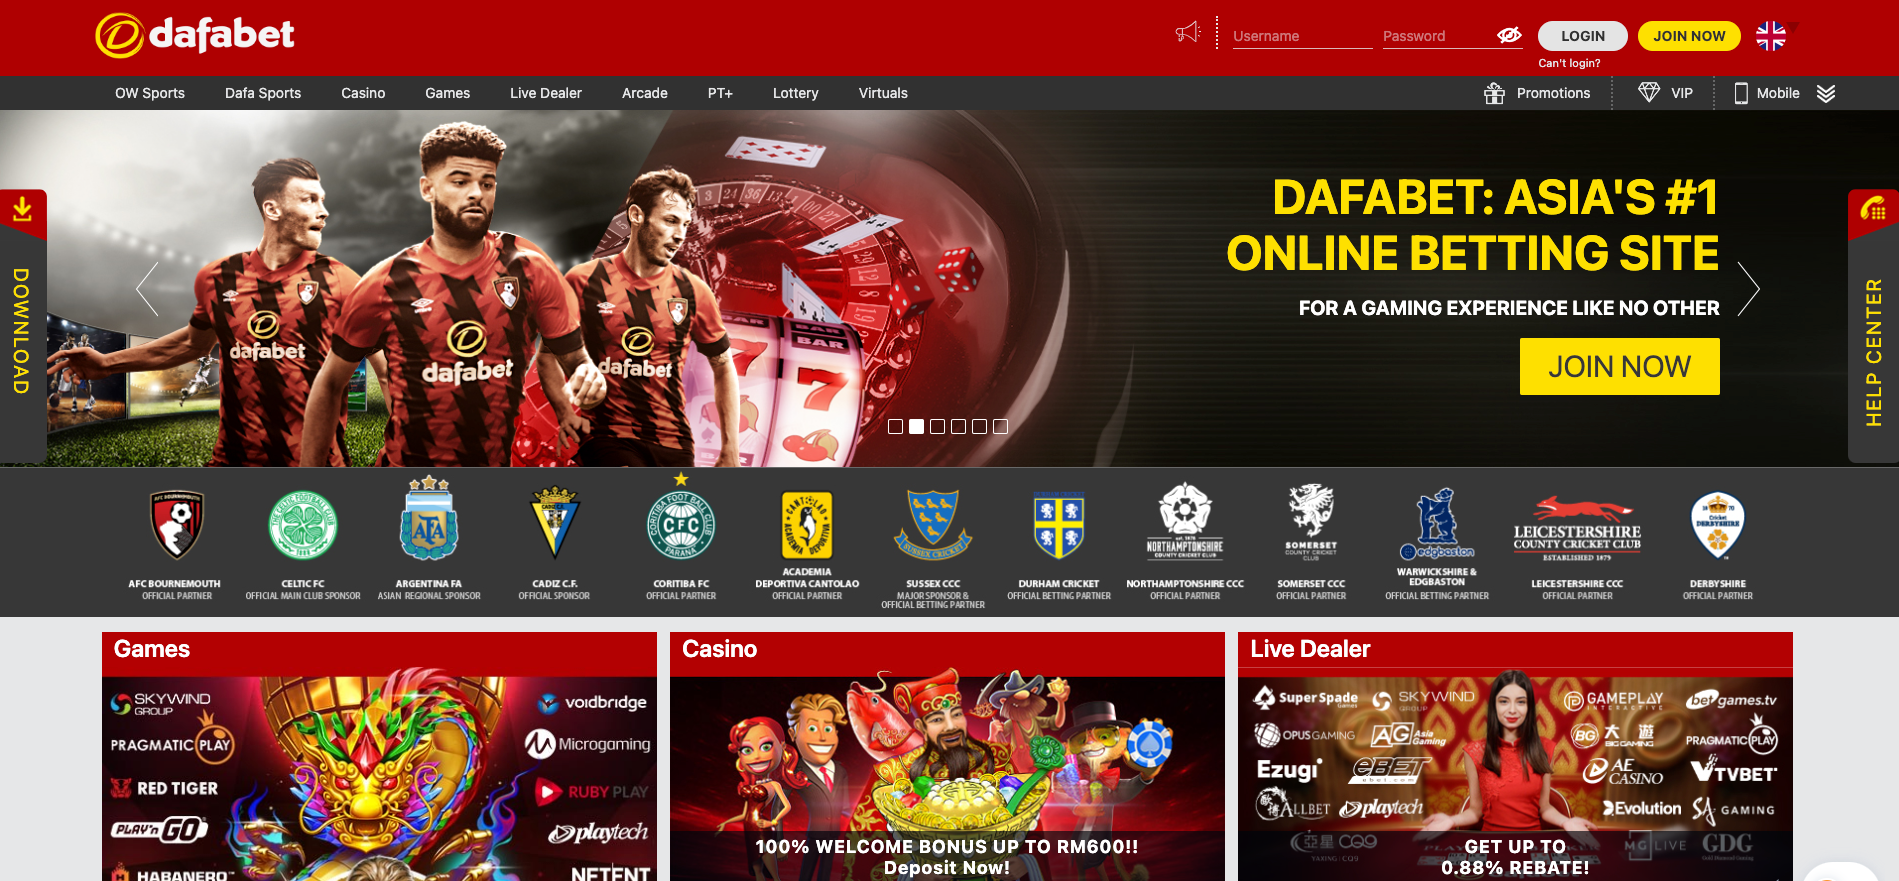 Image shows Dafabet official website